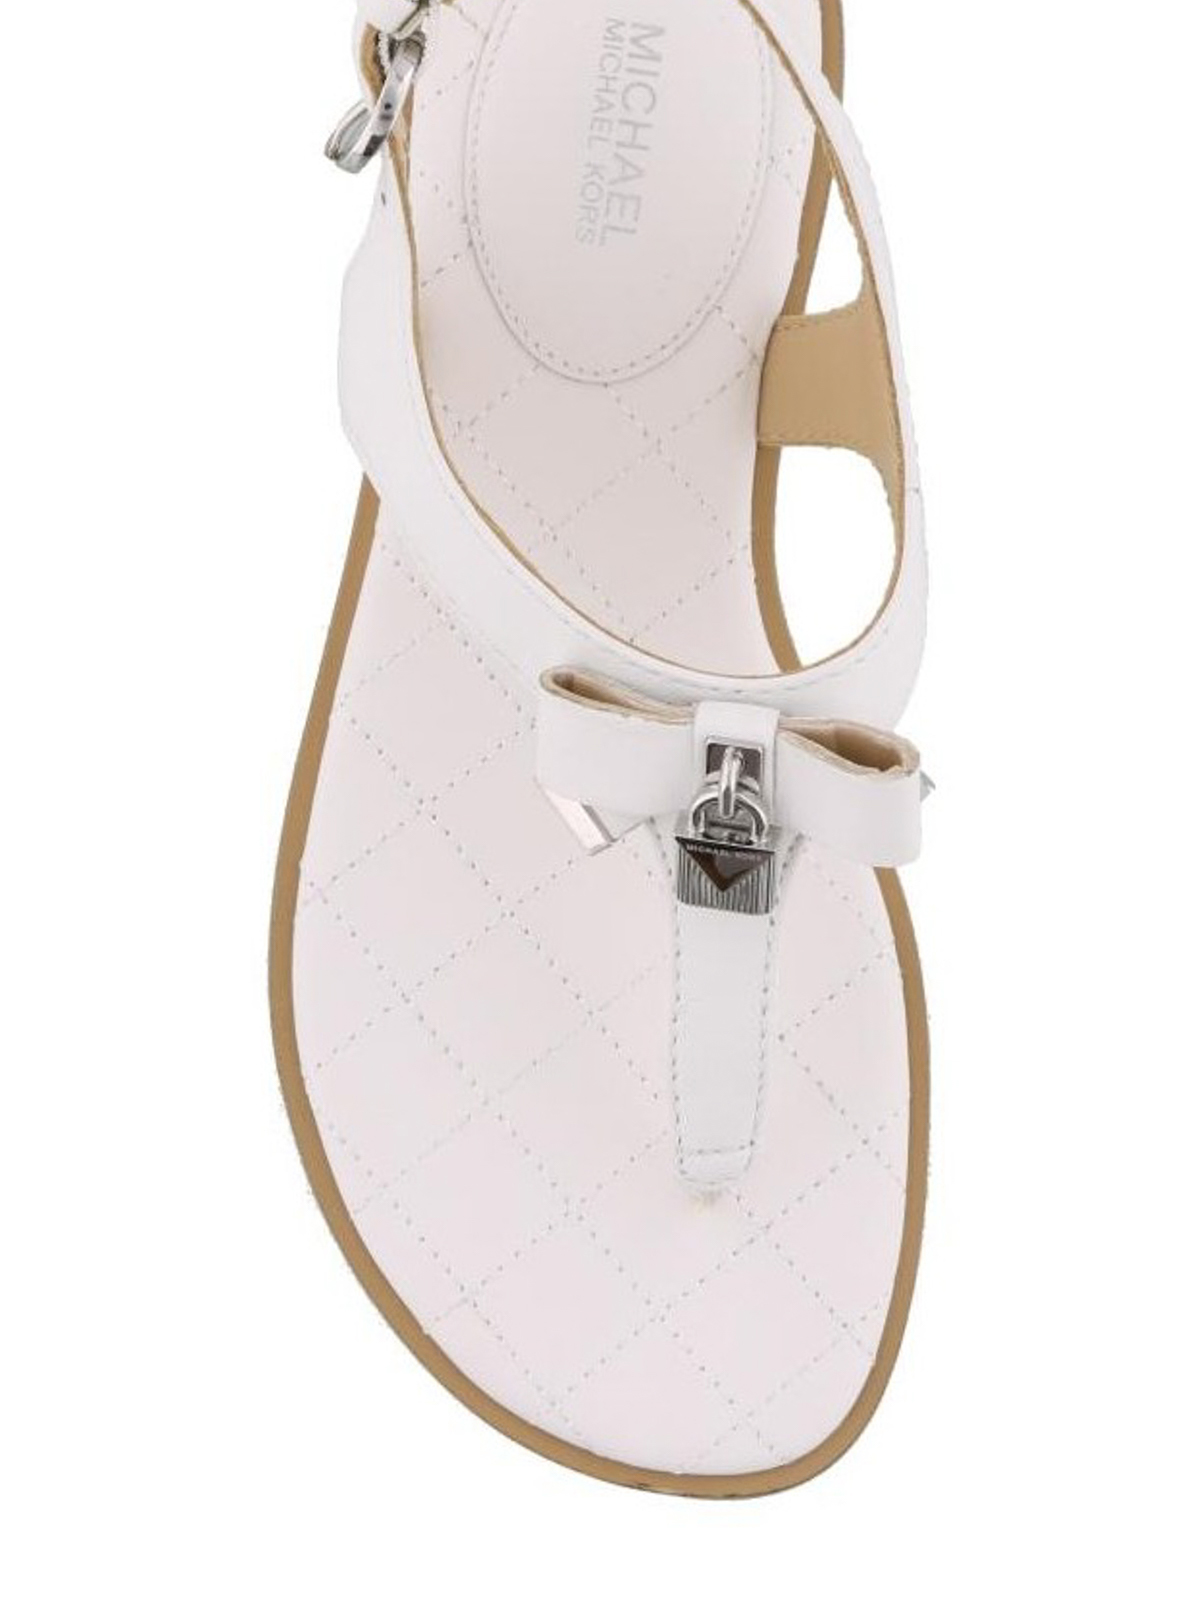 Michael Kors  Shoes  Michael Kors White Sandals With Silver Lock   Poshmark